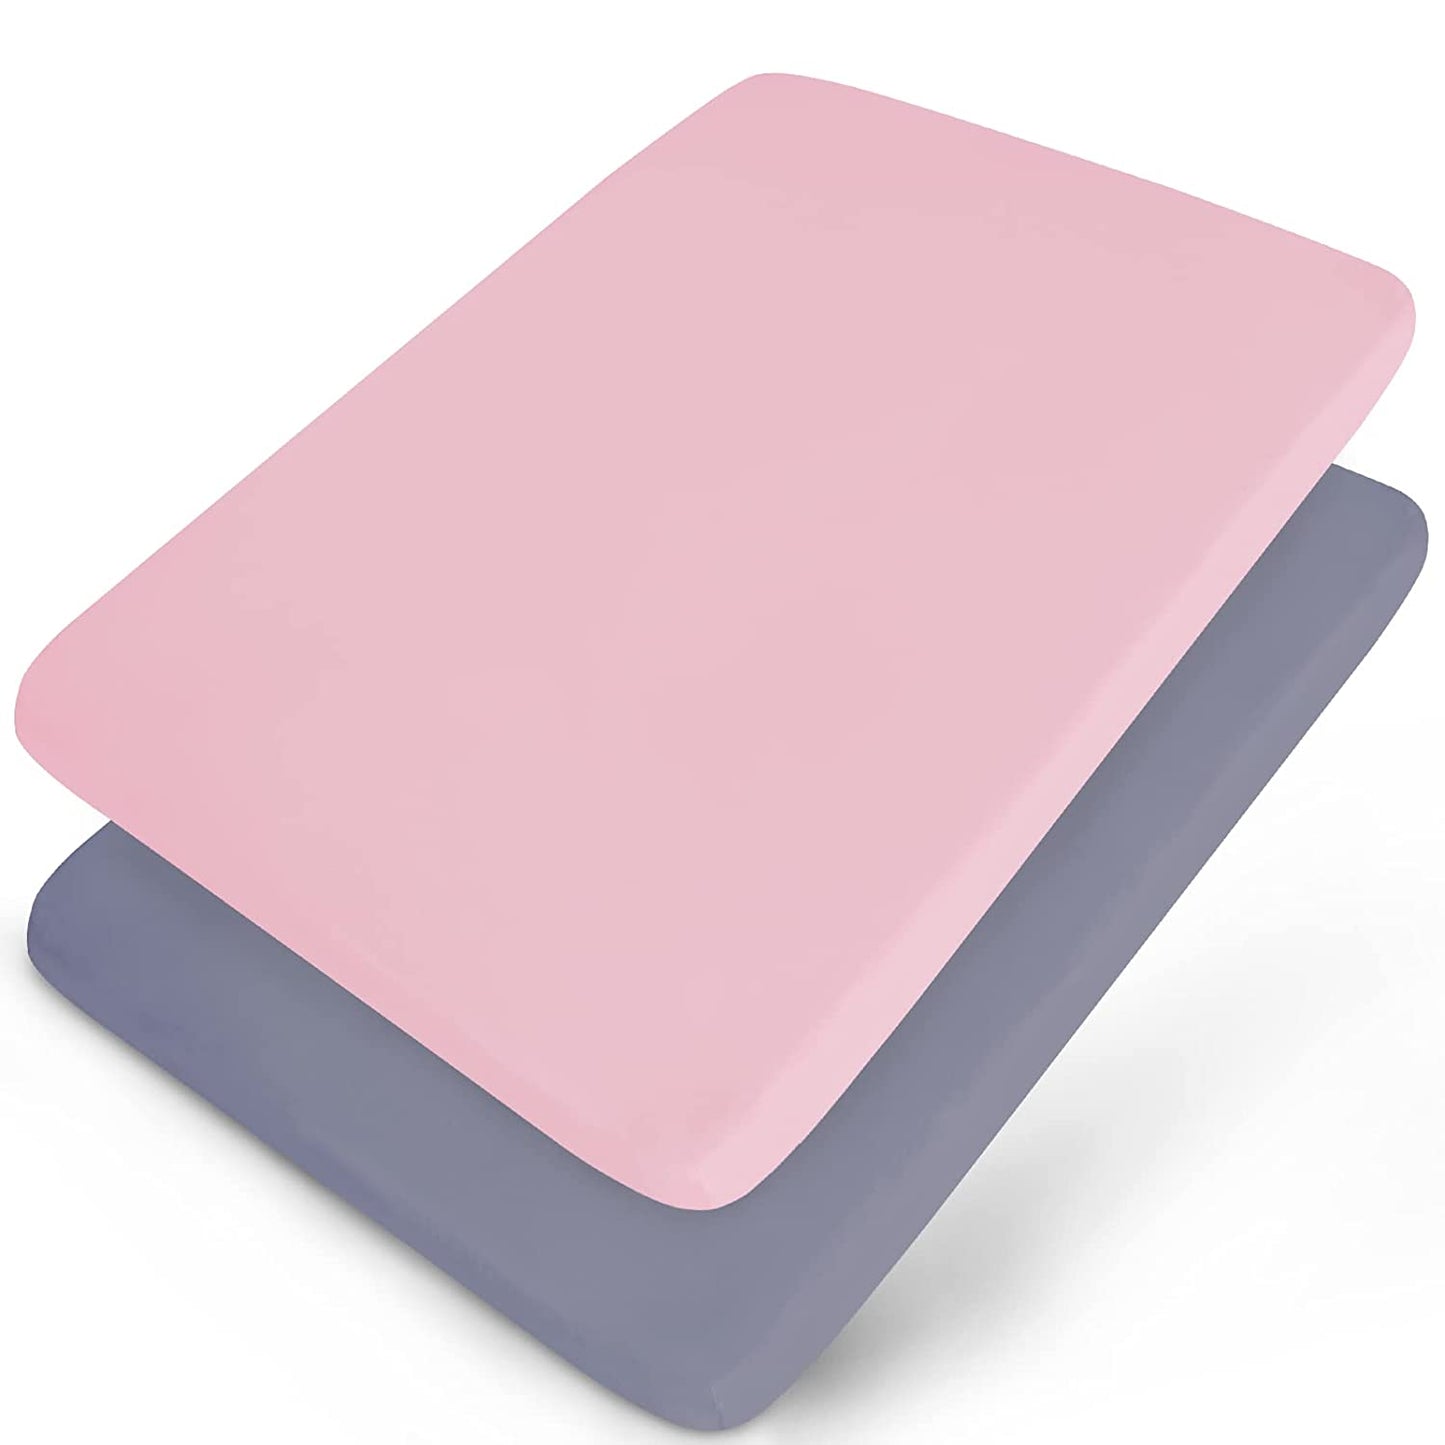 Mini Crib Sheets - 2 Pack, Ultra Soft Microfiber, Grey & Pink (38'' x 24'')